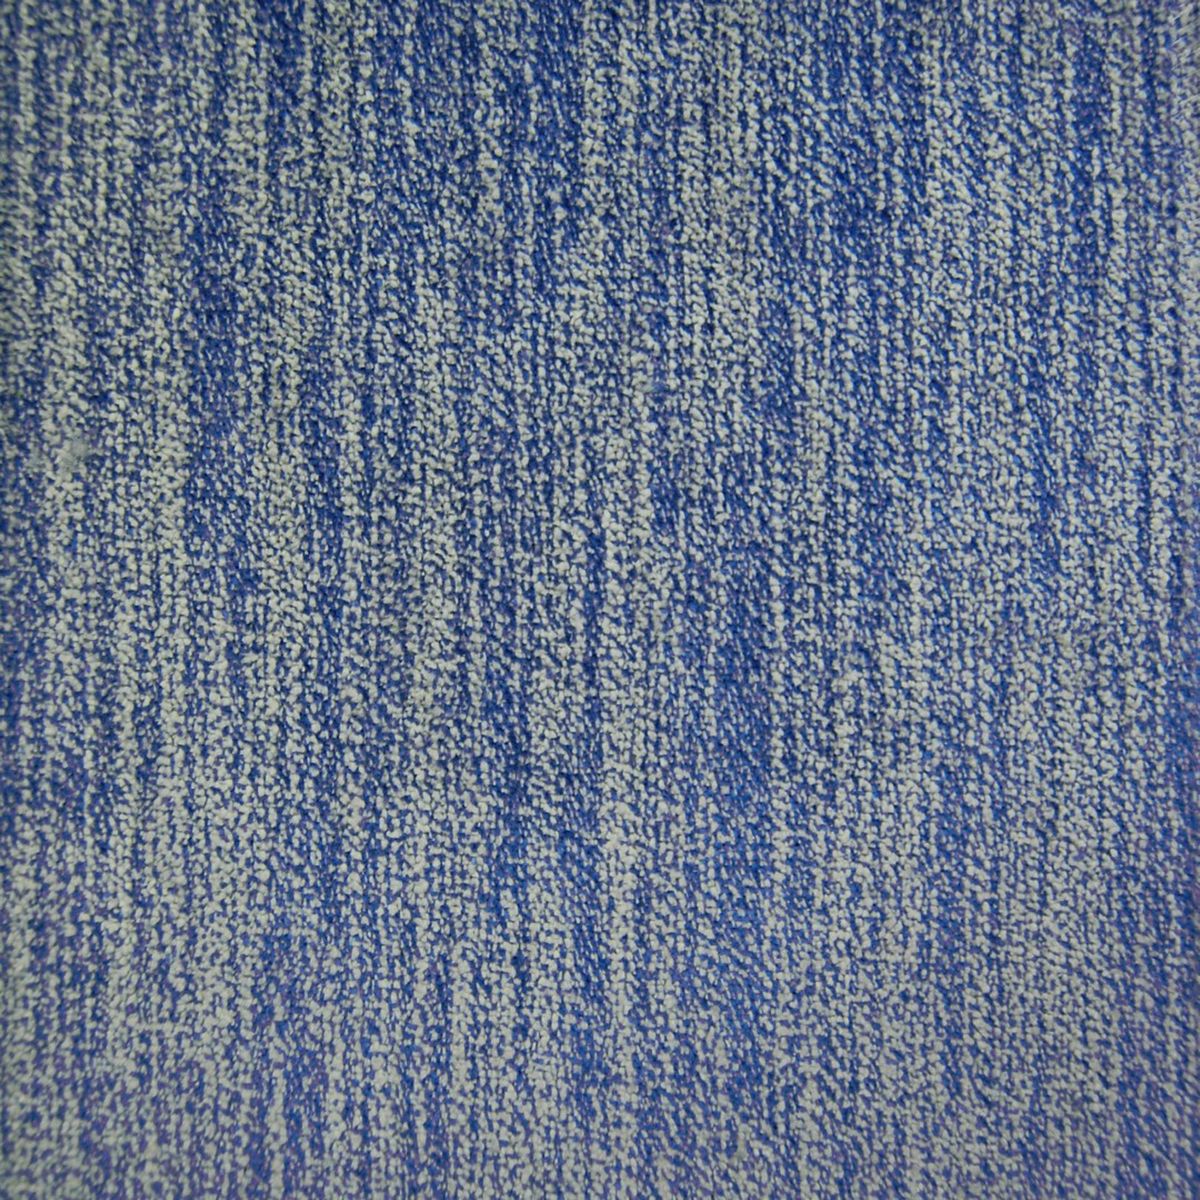 Vellamo Sapphire Velvet Fabric by Voyage Maison